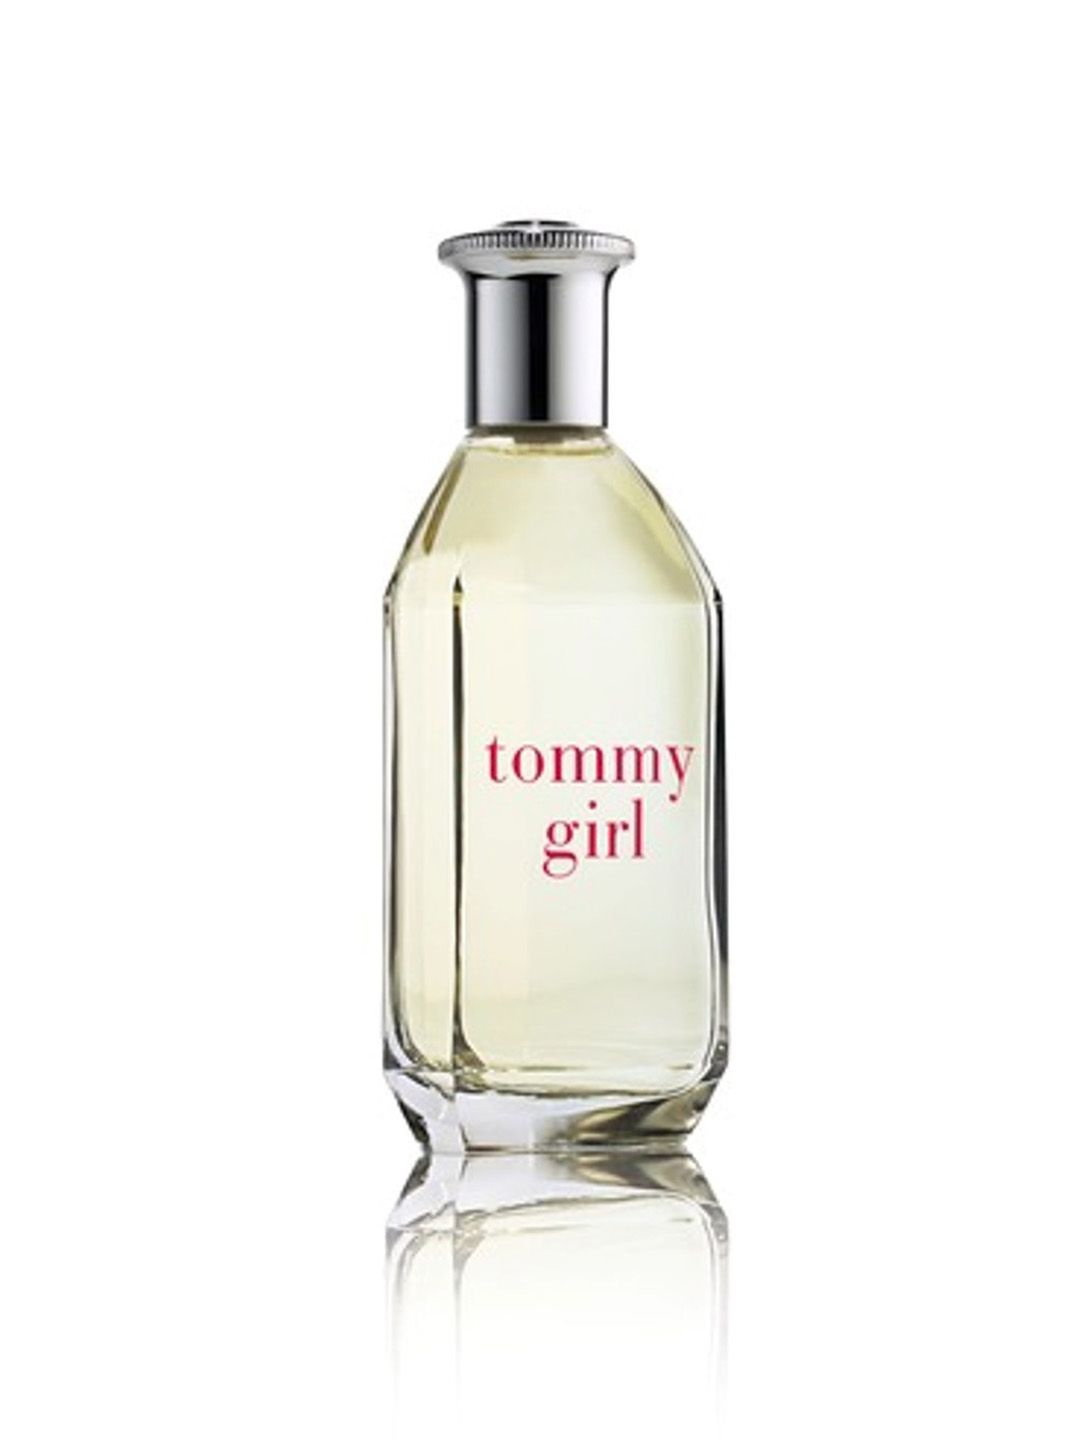 Tommy Hilfiger Girl Cologne Eau De Toilette Spray Vaporisateur 50 ml Price in India